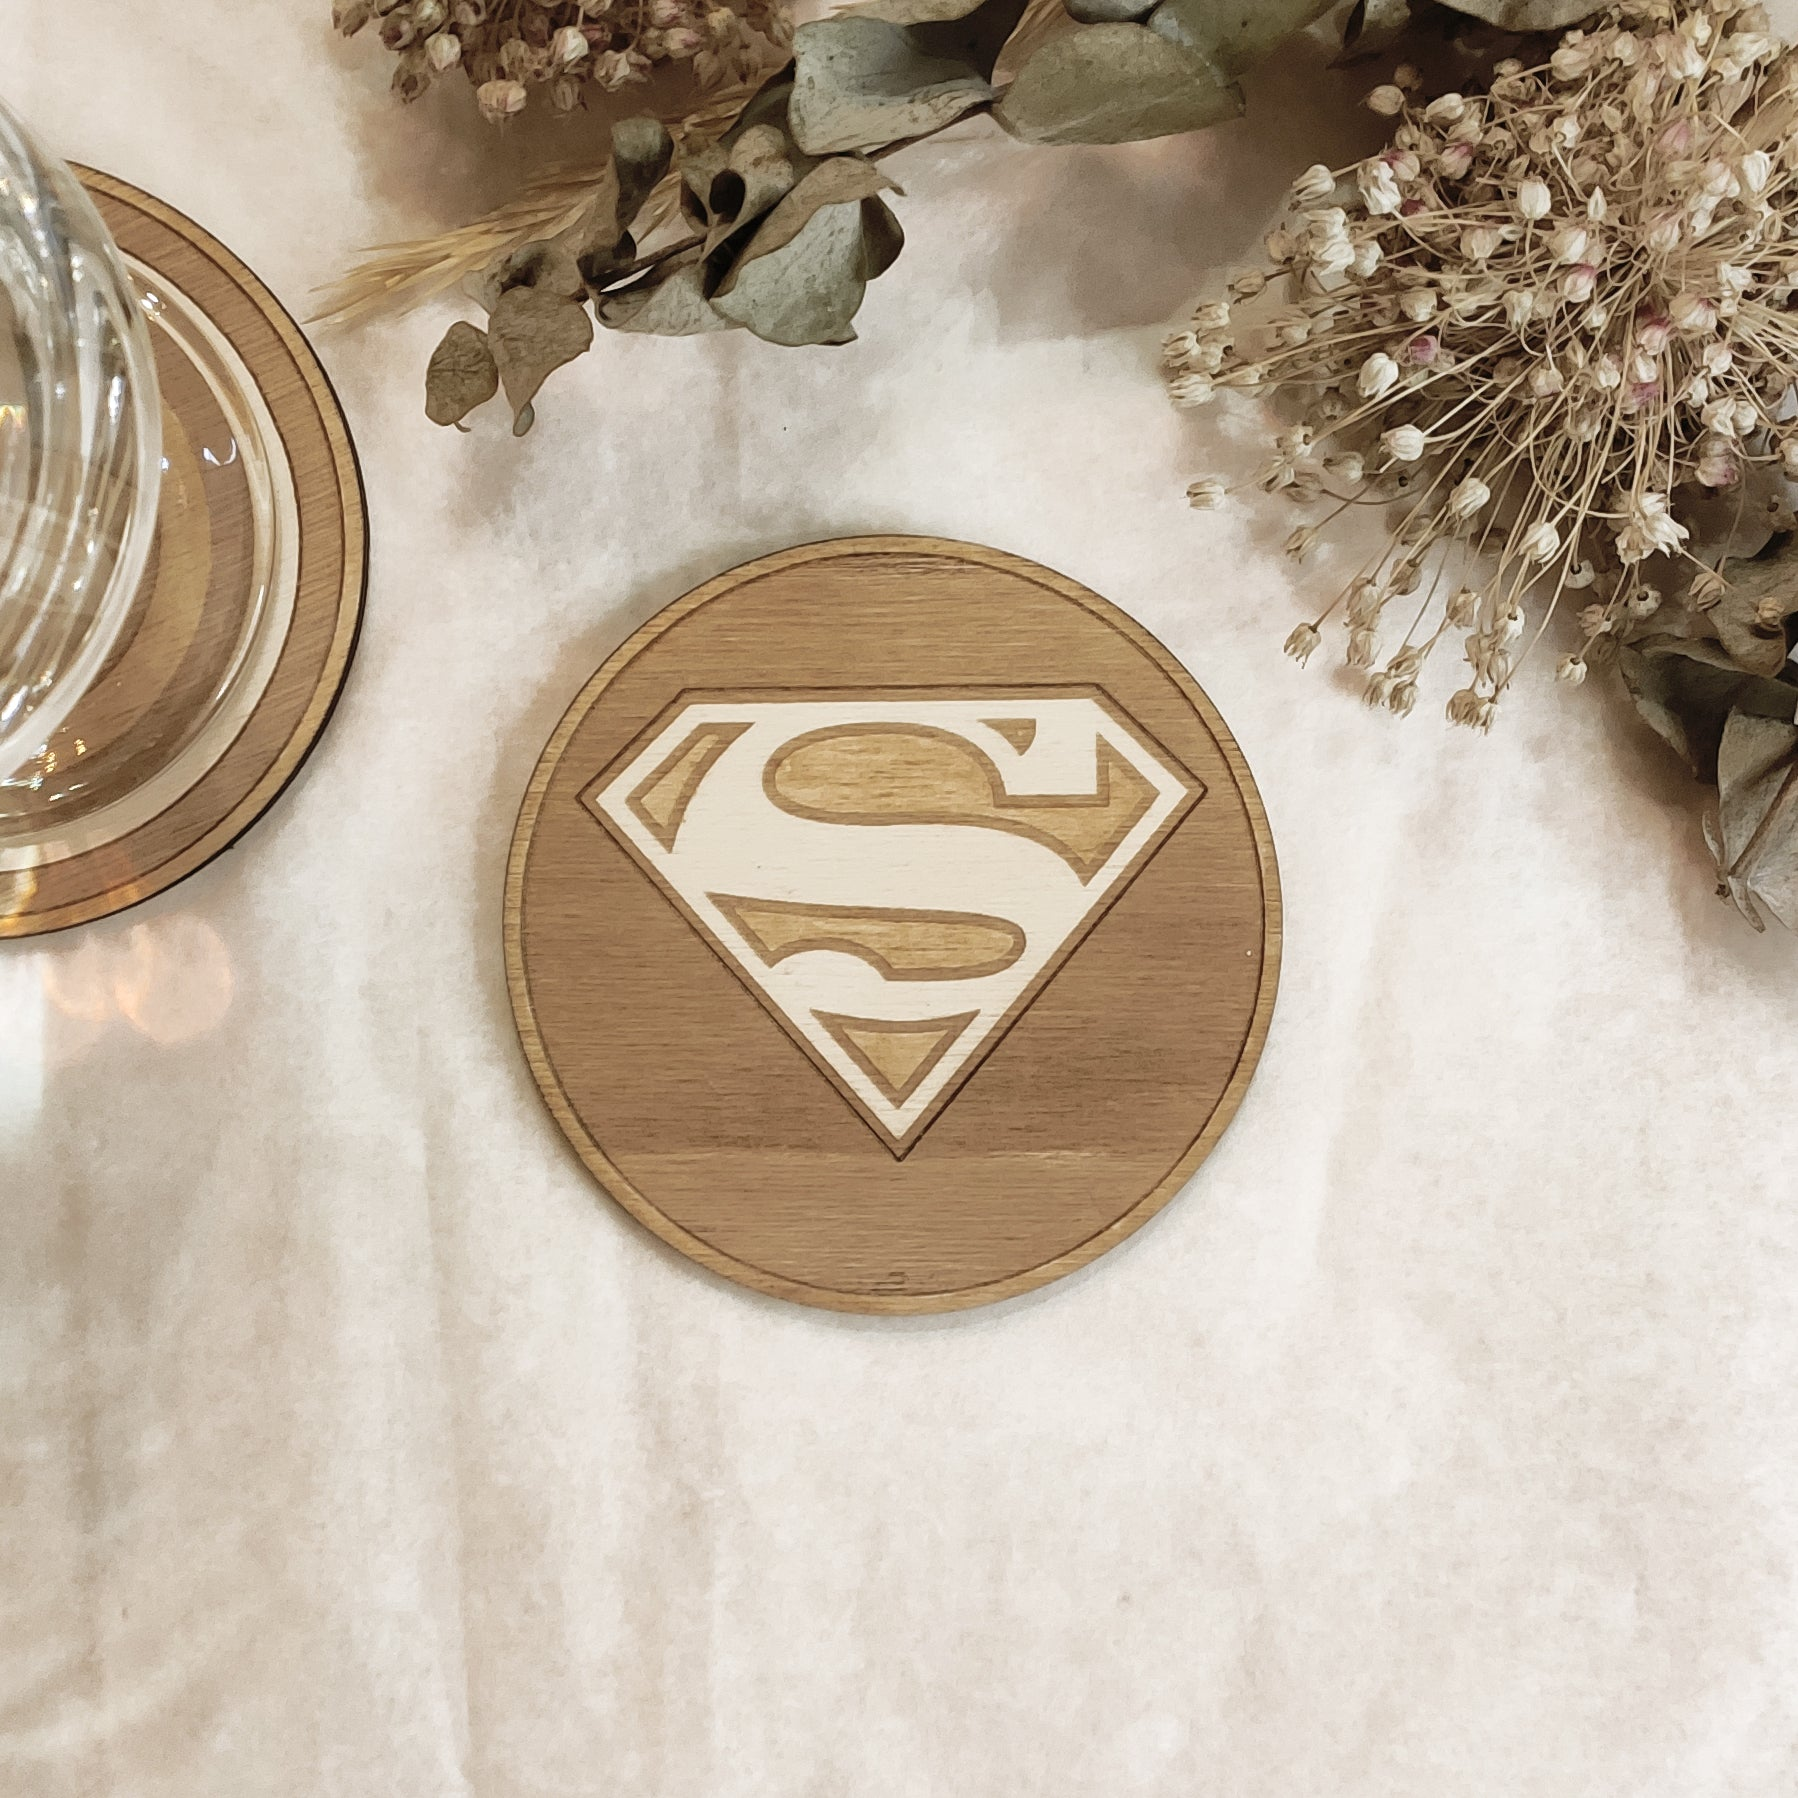 Set of 6 Superheroes Wooden Coasters - Handmade Gift - Housewarming - Wood Kitchenware